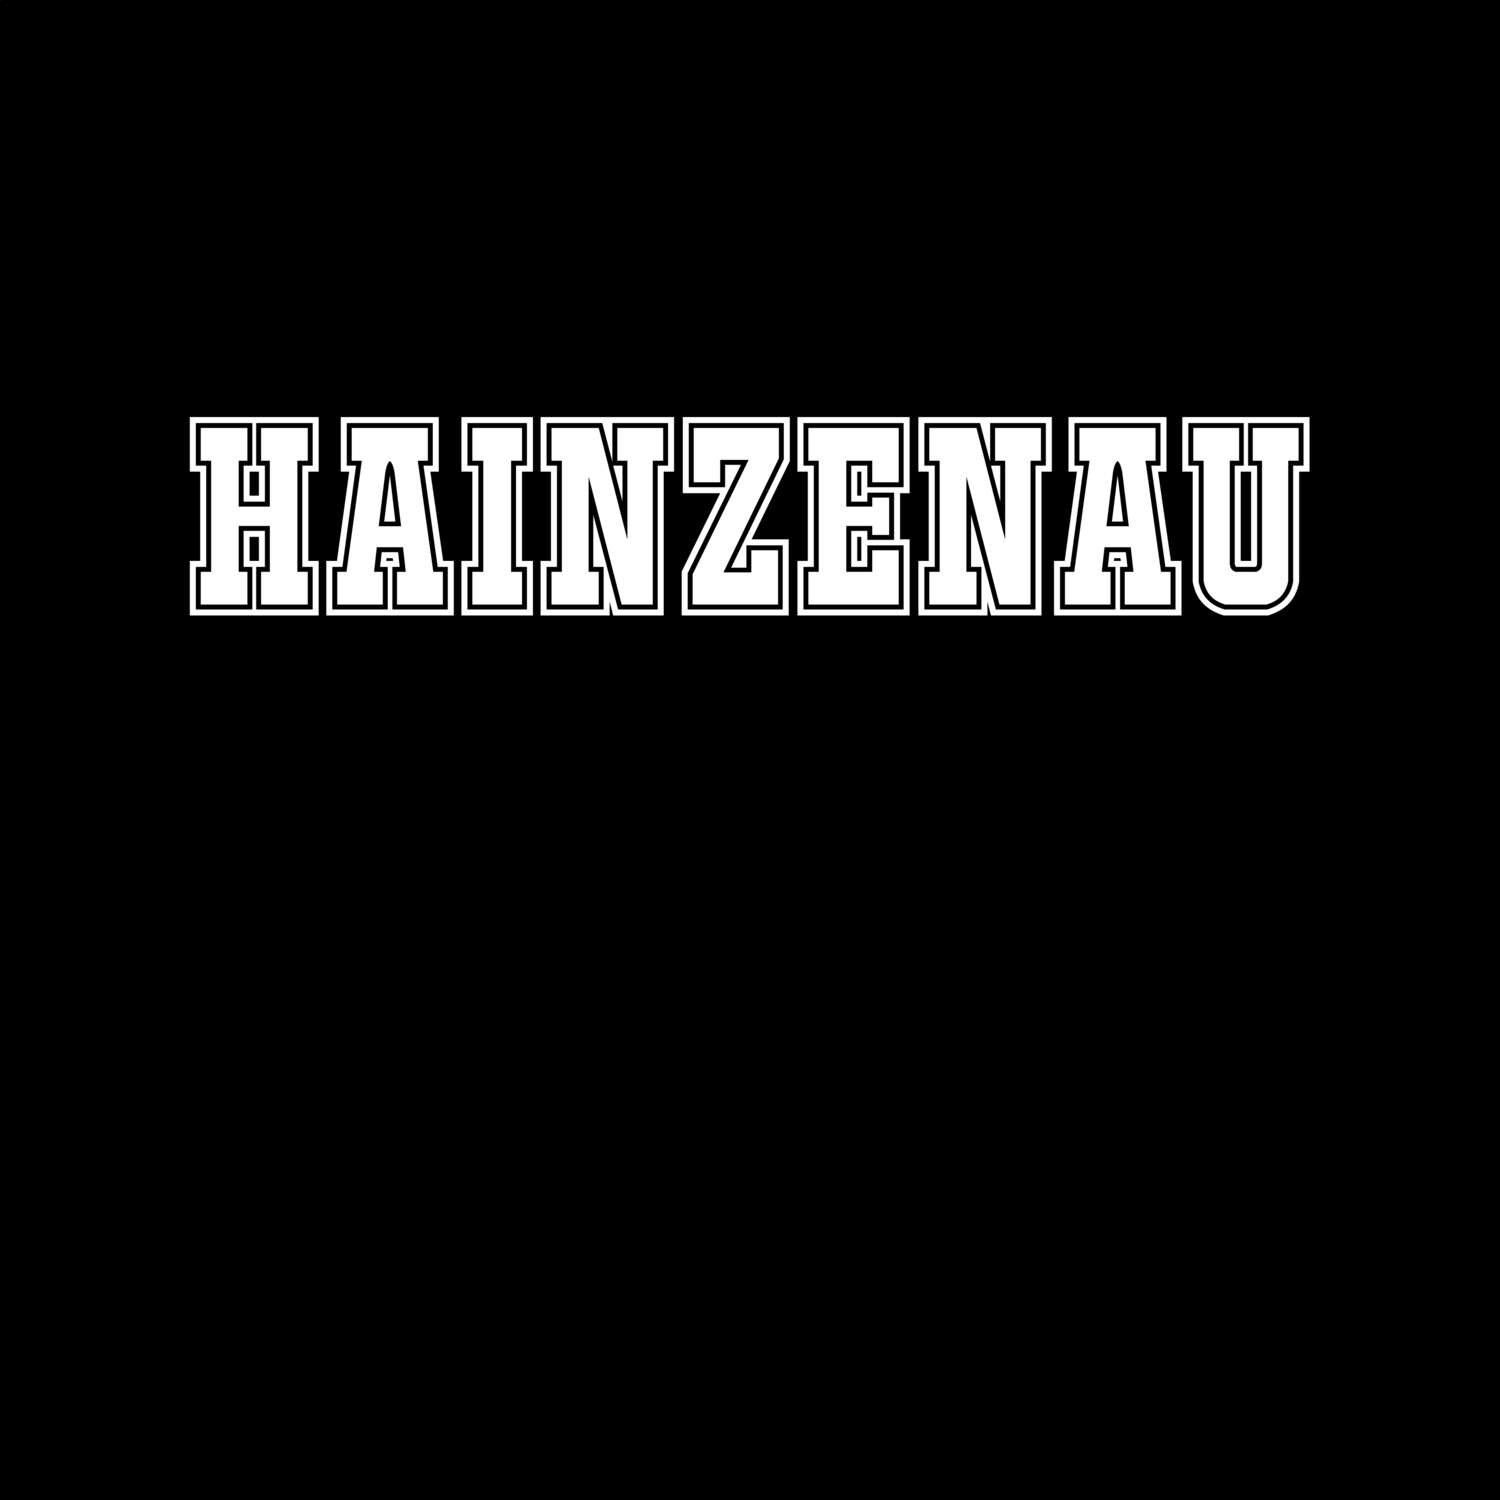 Hainzenau T-Shirt »Classic«